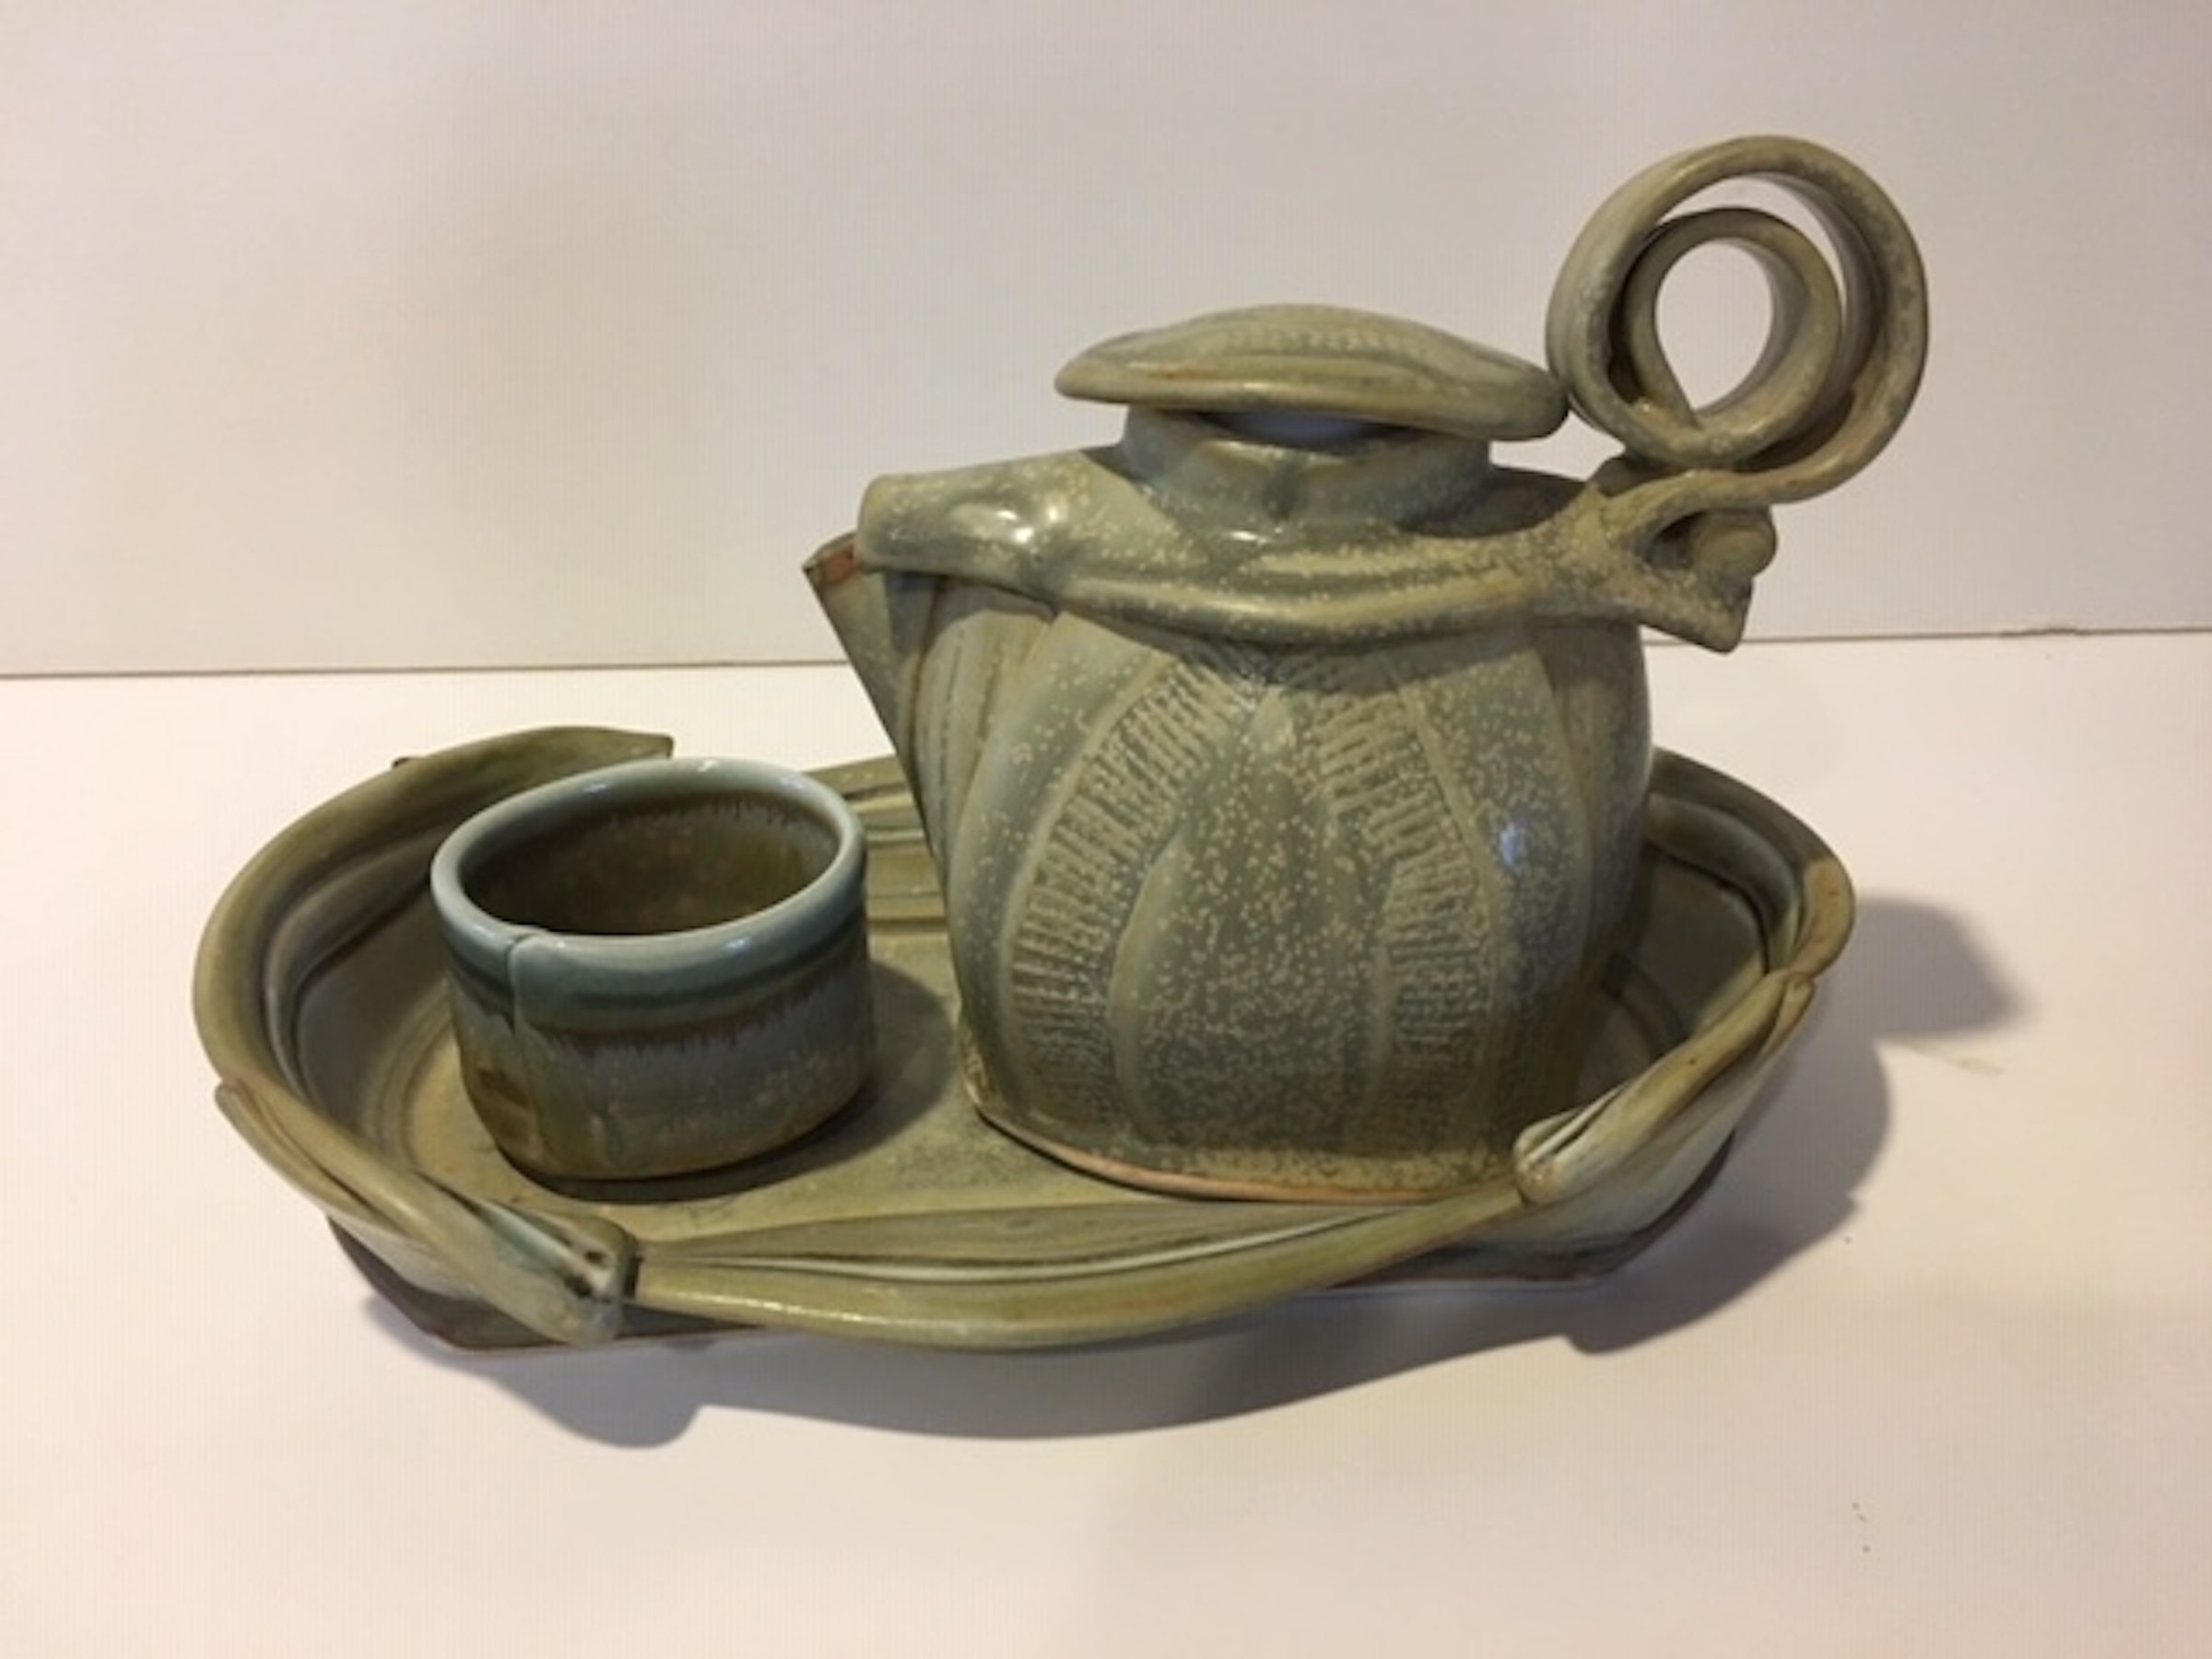 Small Tea Cup Ceramic Tea Bowl